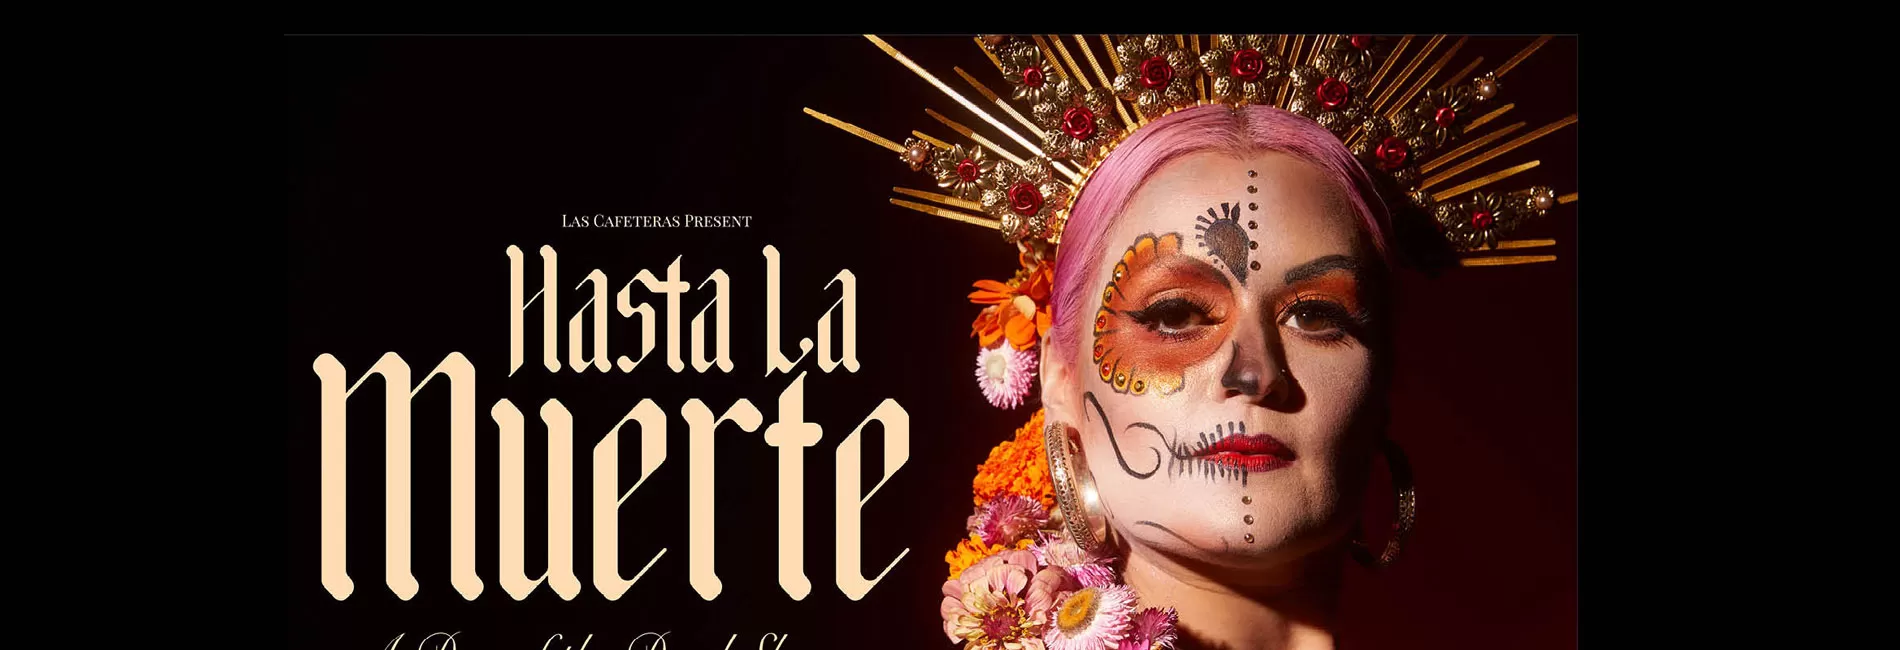 Hasta La Muerte - A Day of the Dead Show